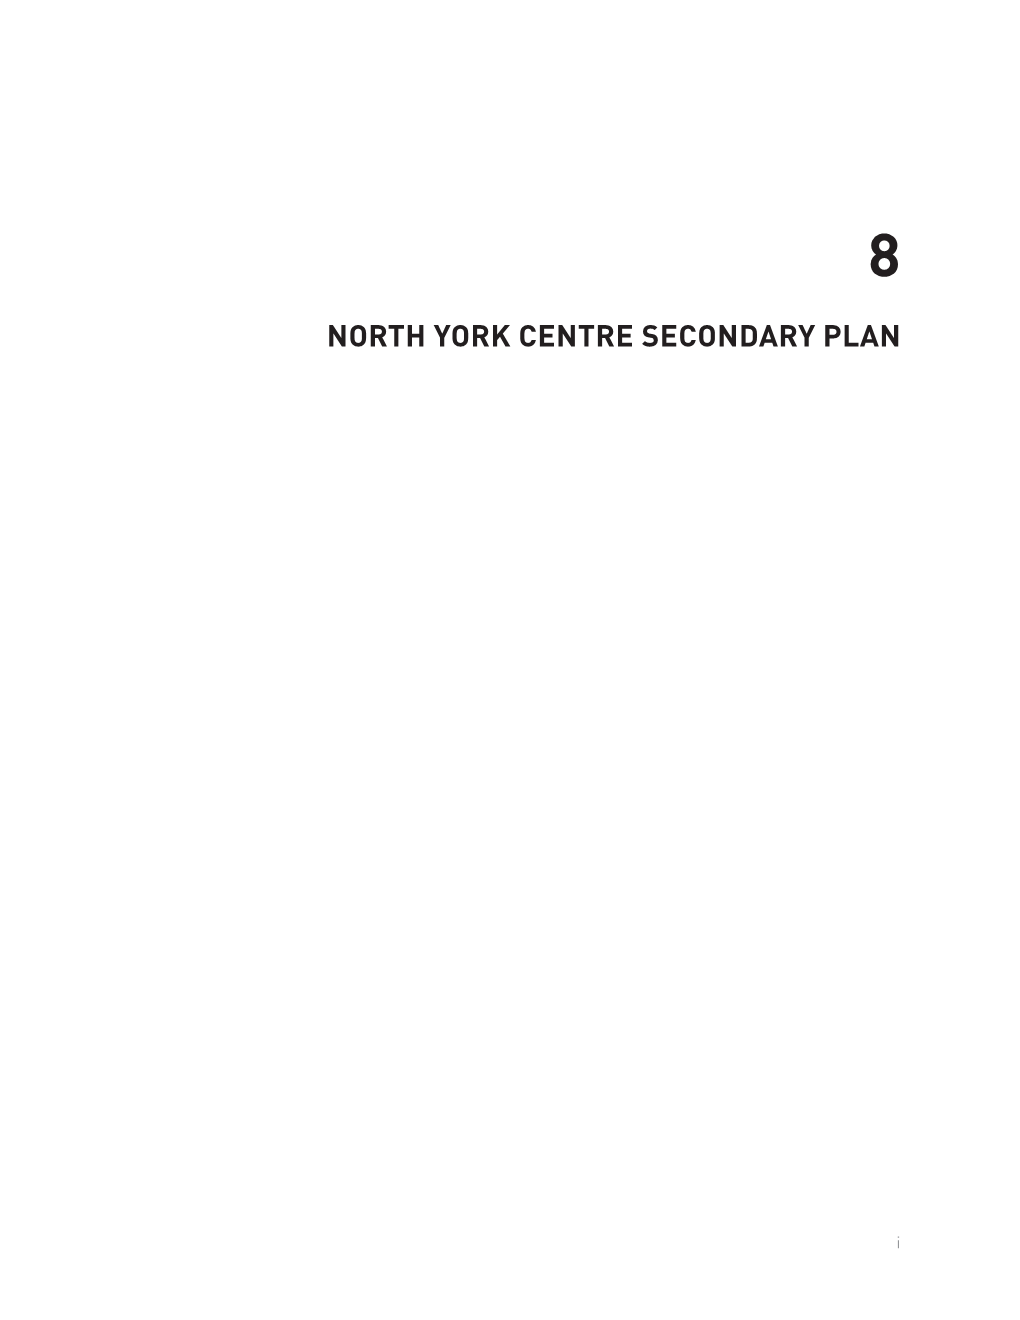 North York Centre Secondary Plan